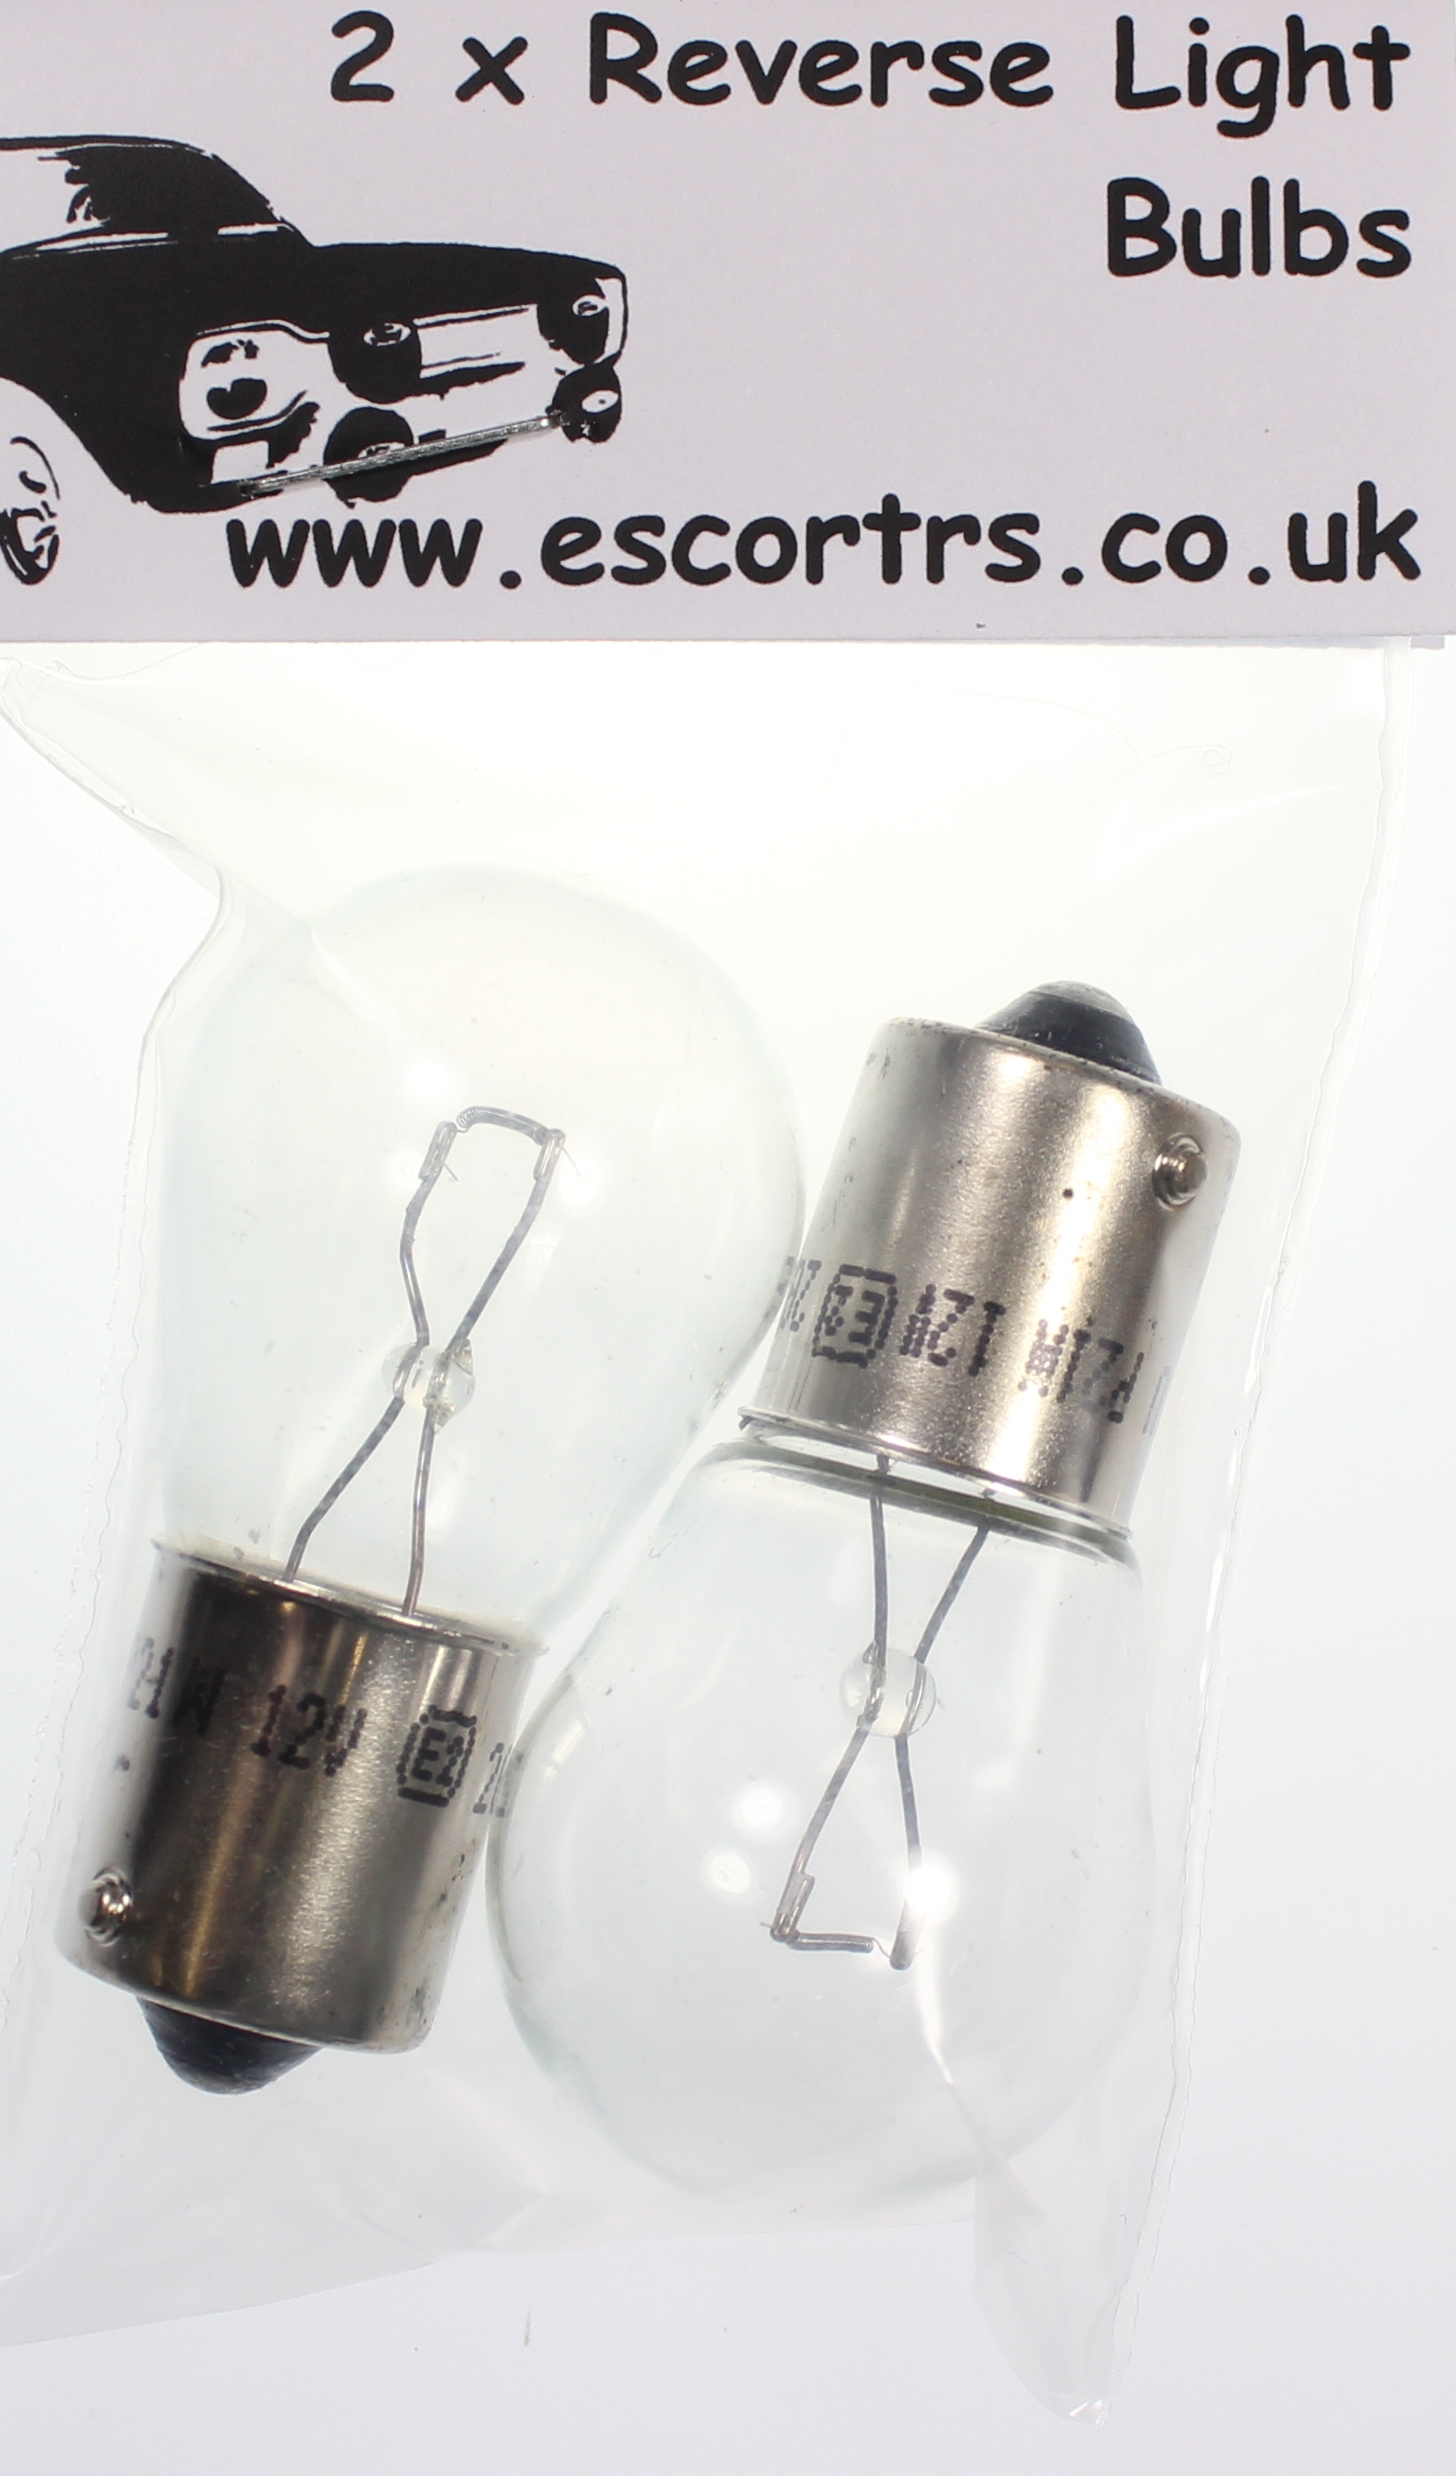 Mk1 Escort Reverse Light Bulbs £1.99